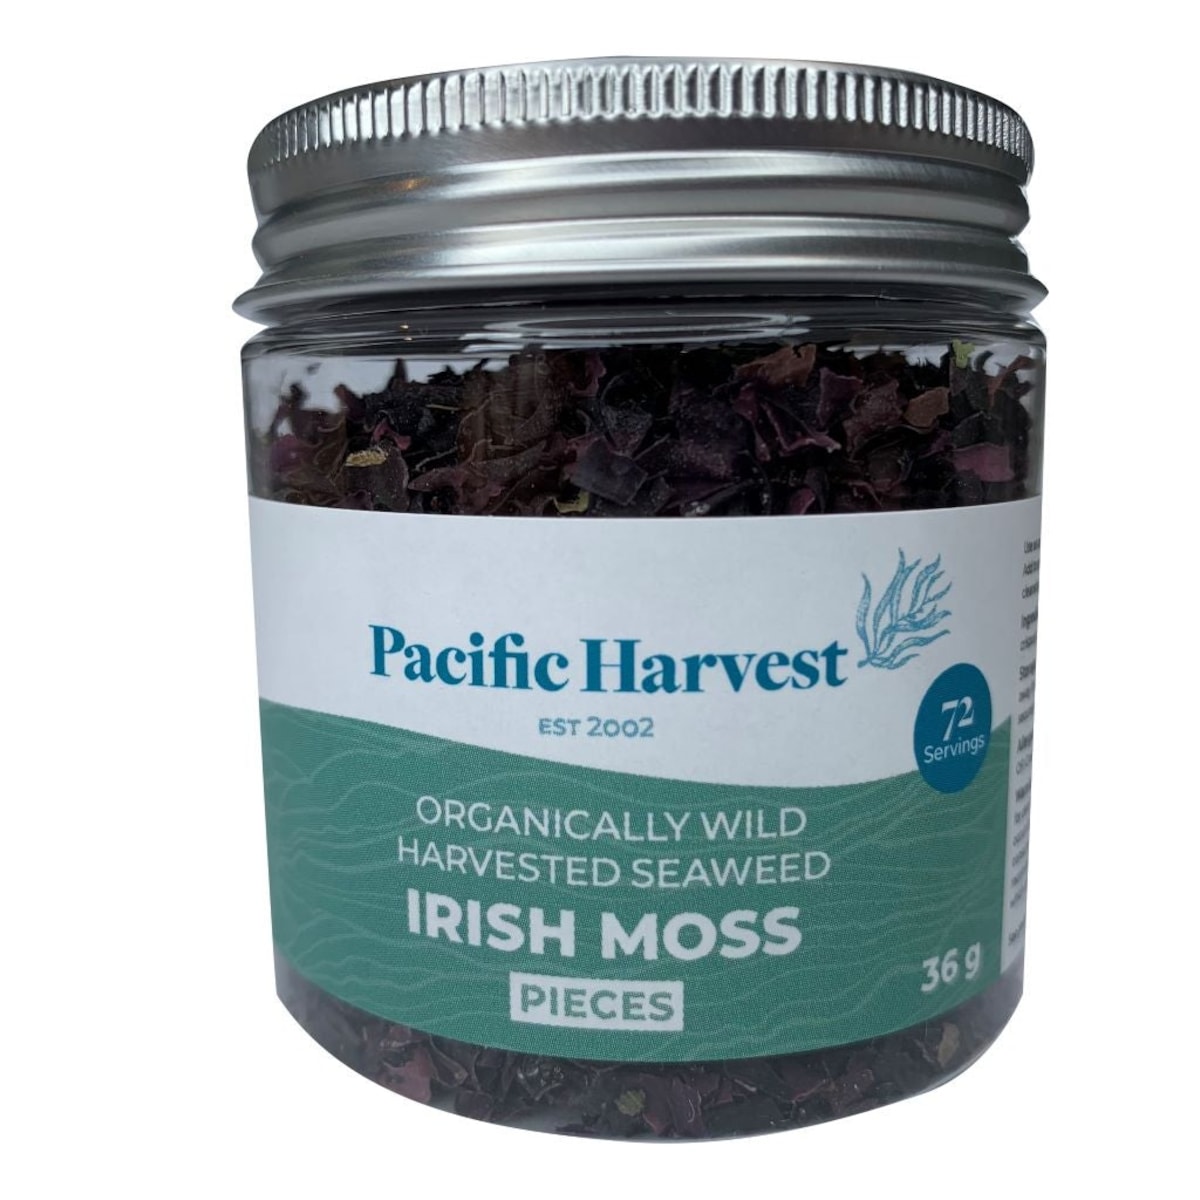 Pacific Harvest Irish Moss Seaweed 36g